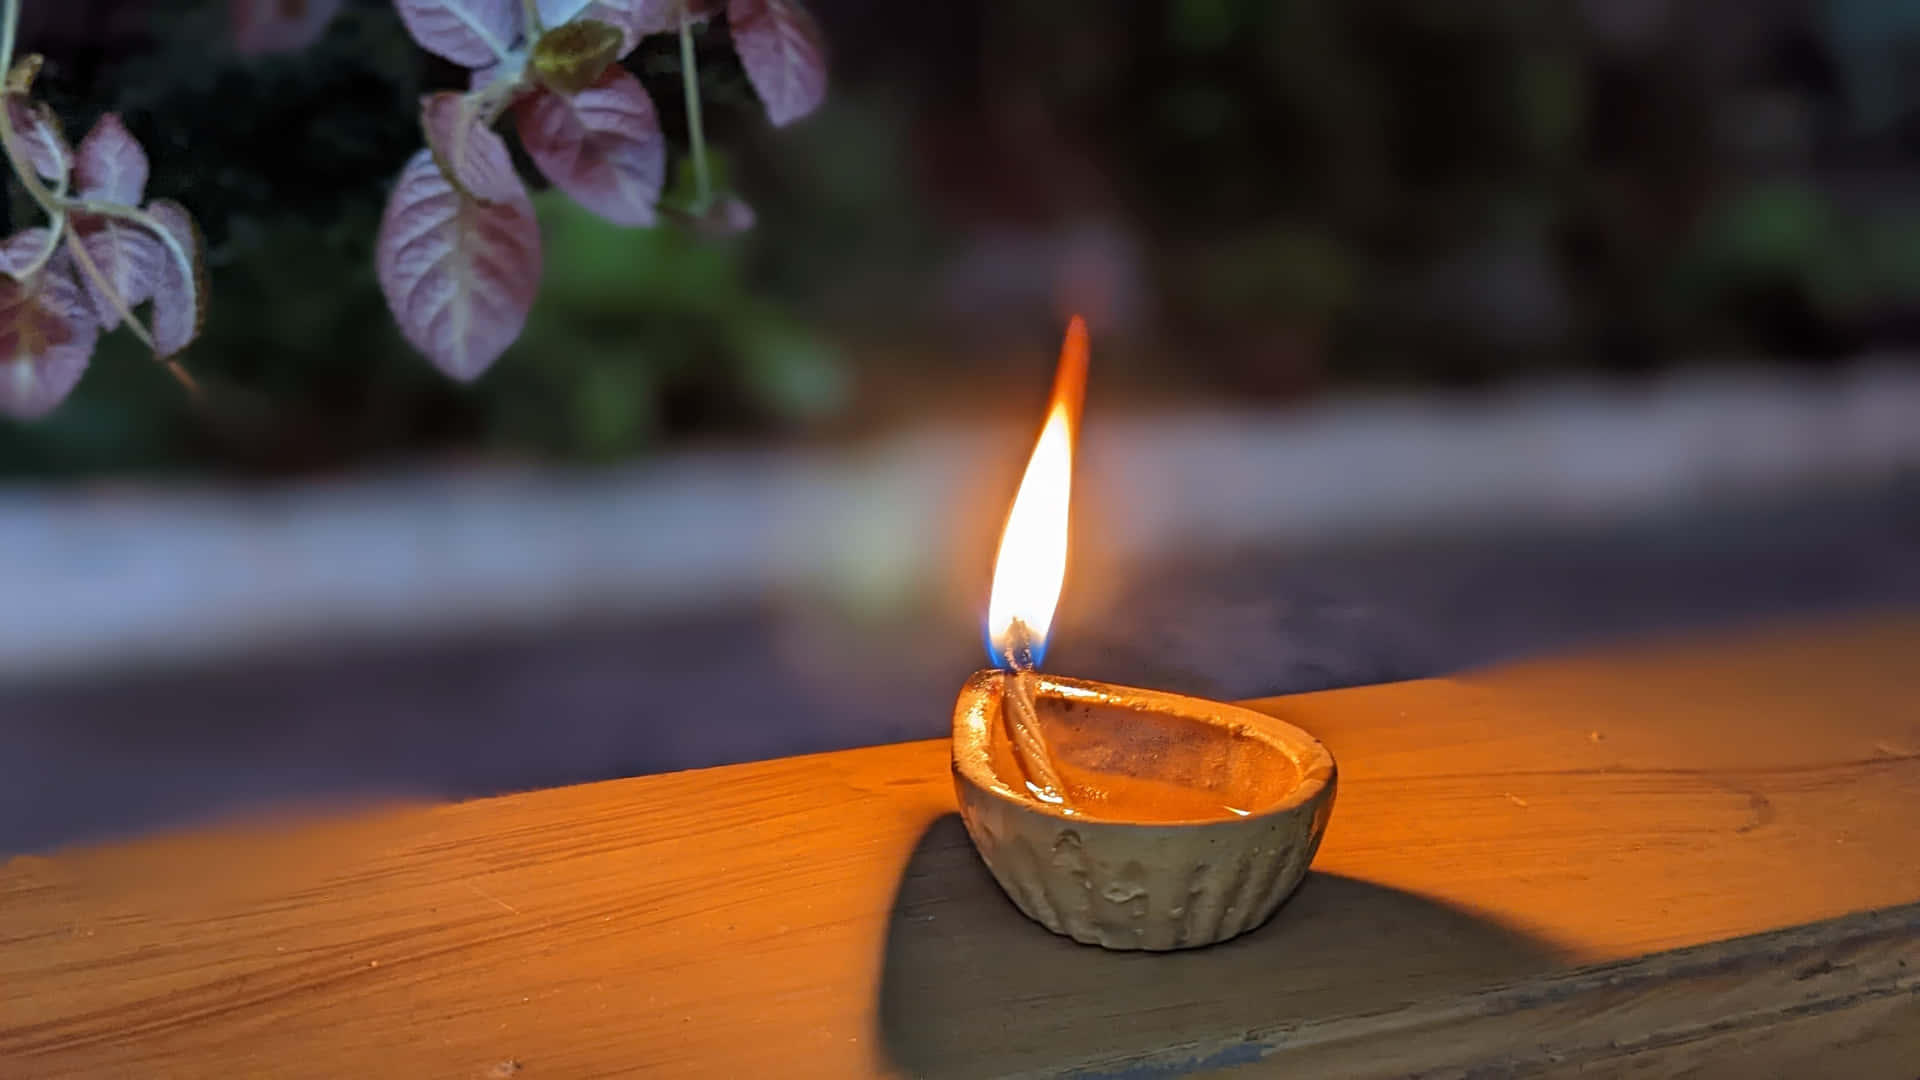 Velaindividual De Diwali En Un Fondo De Mesa.